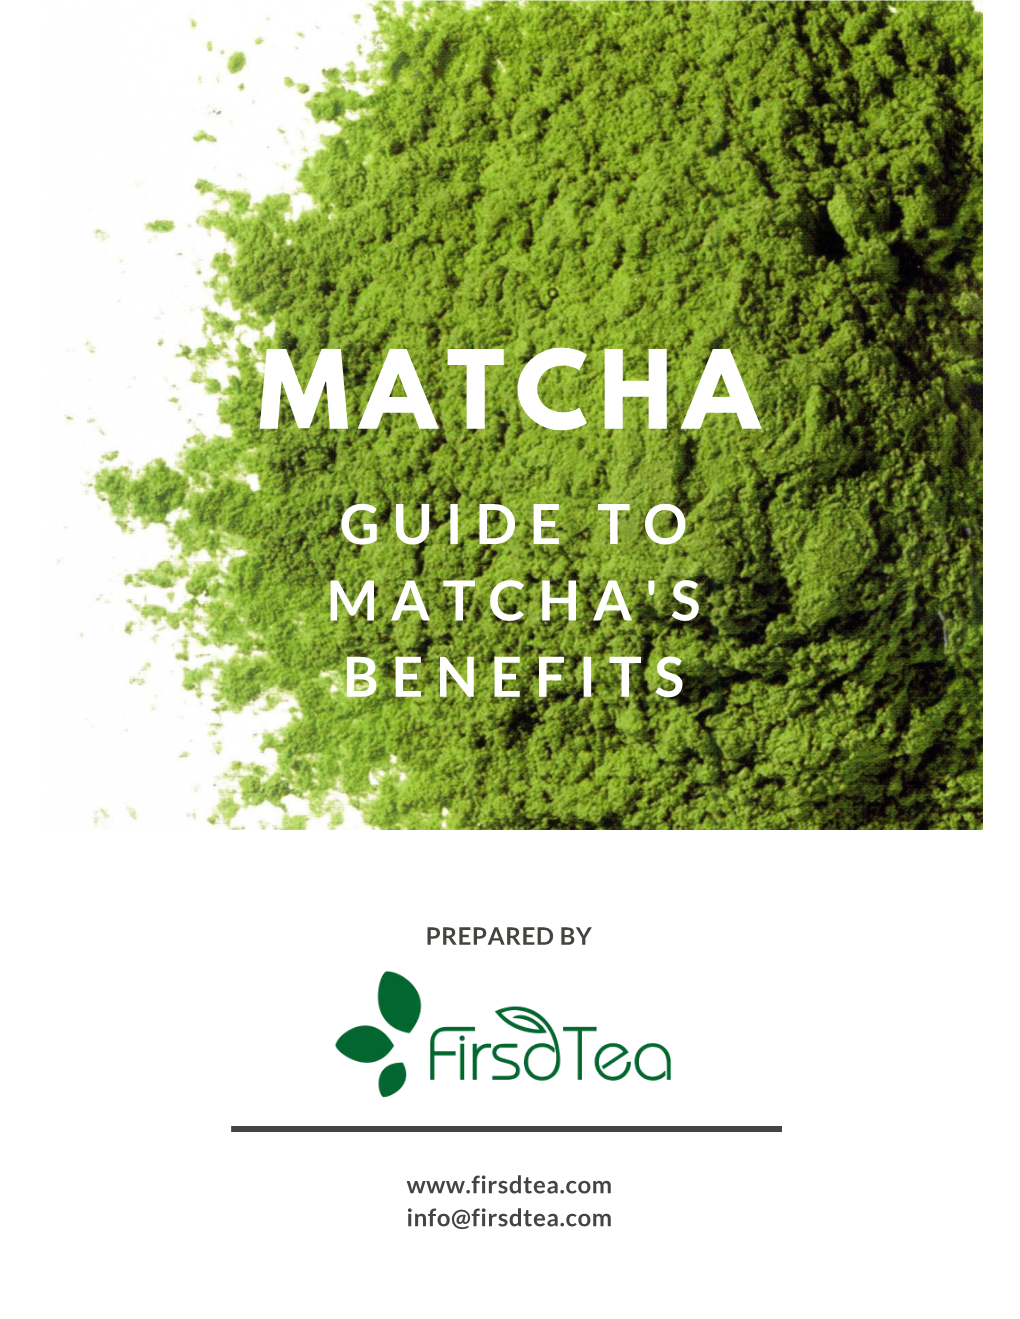 Matcha Guide Firsd Tea 2019.08.27